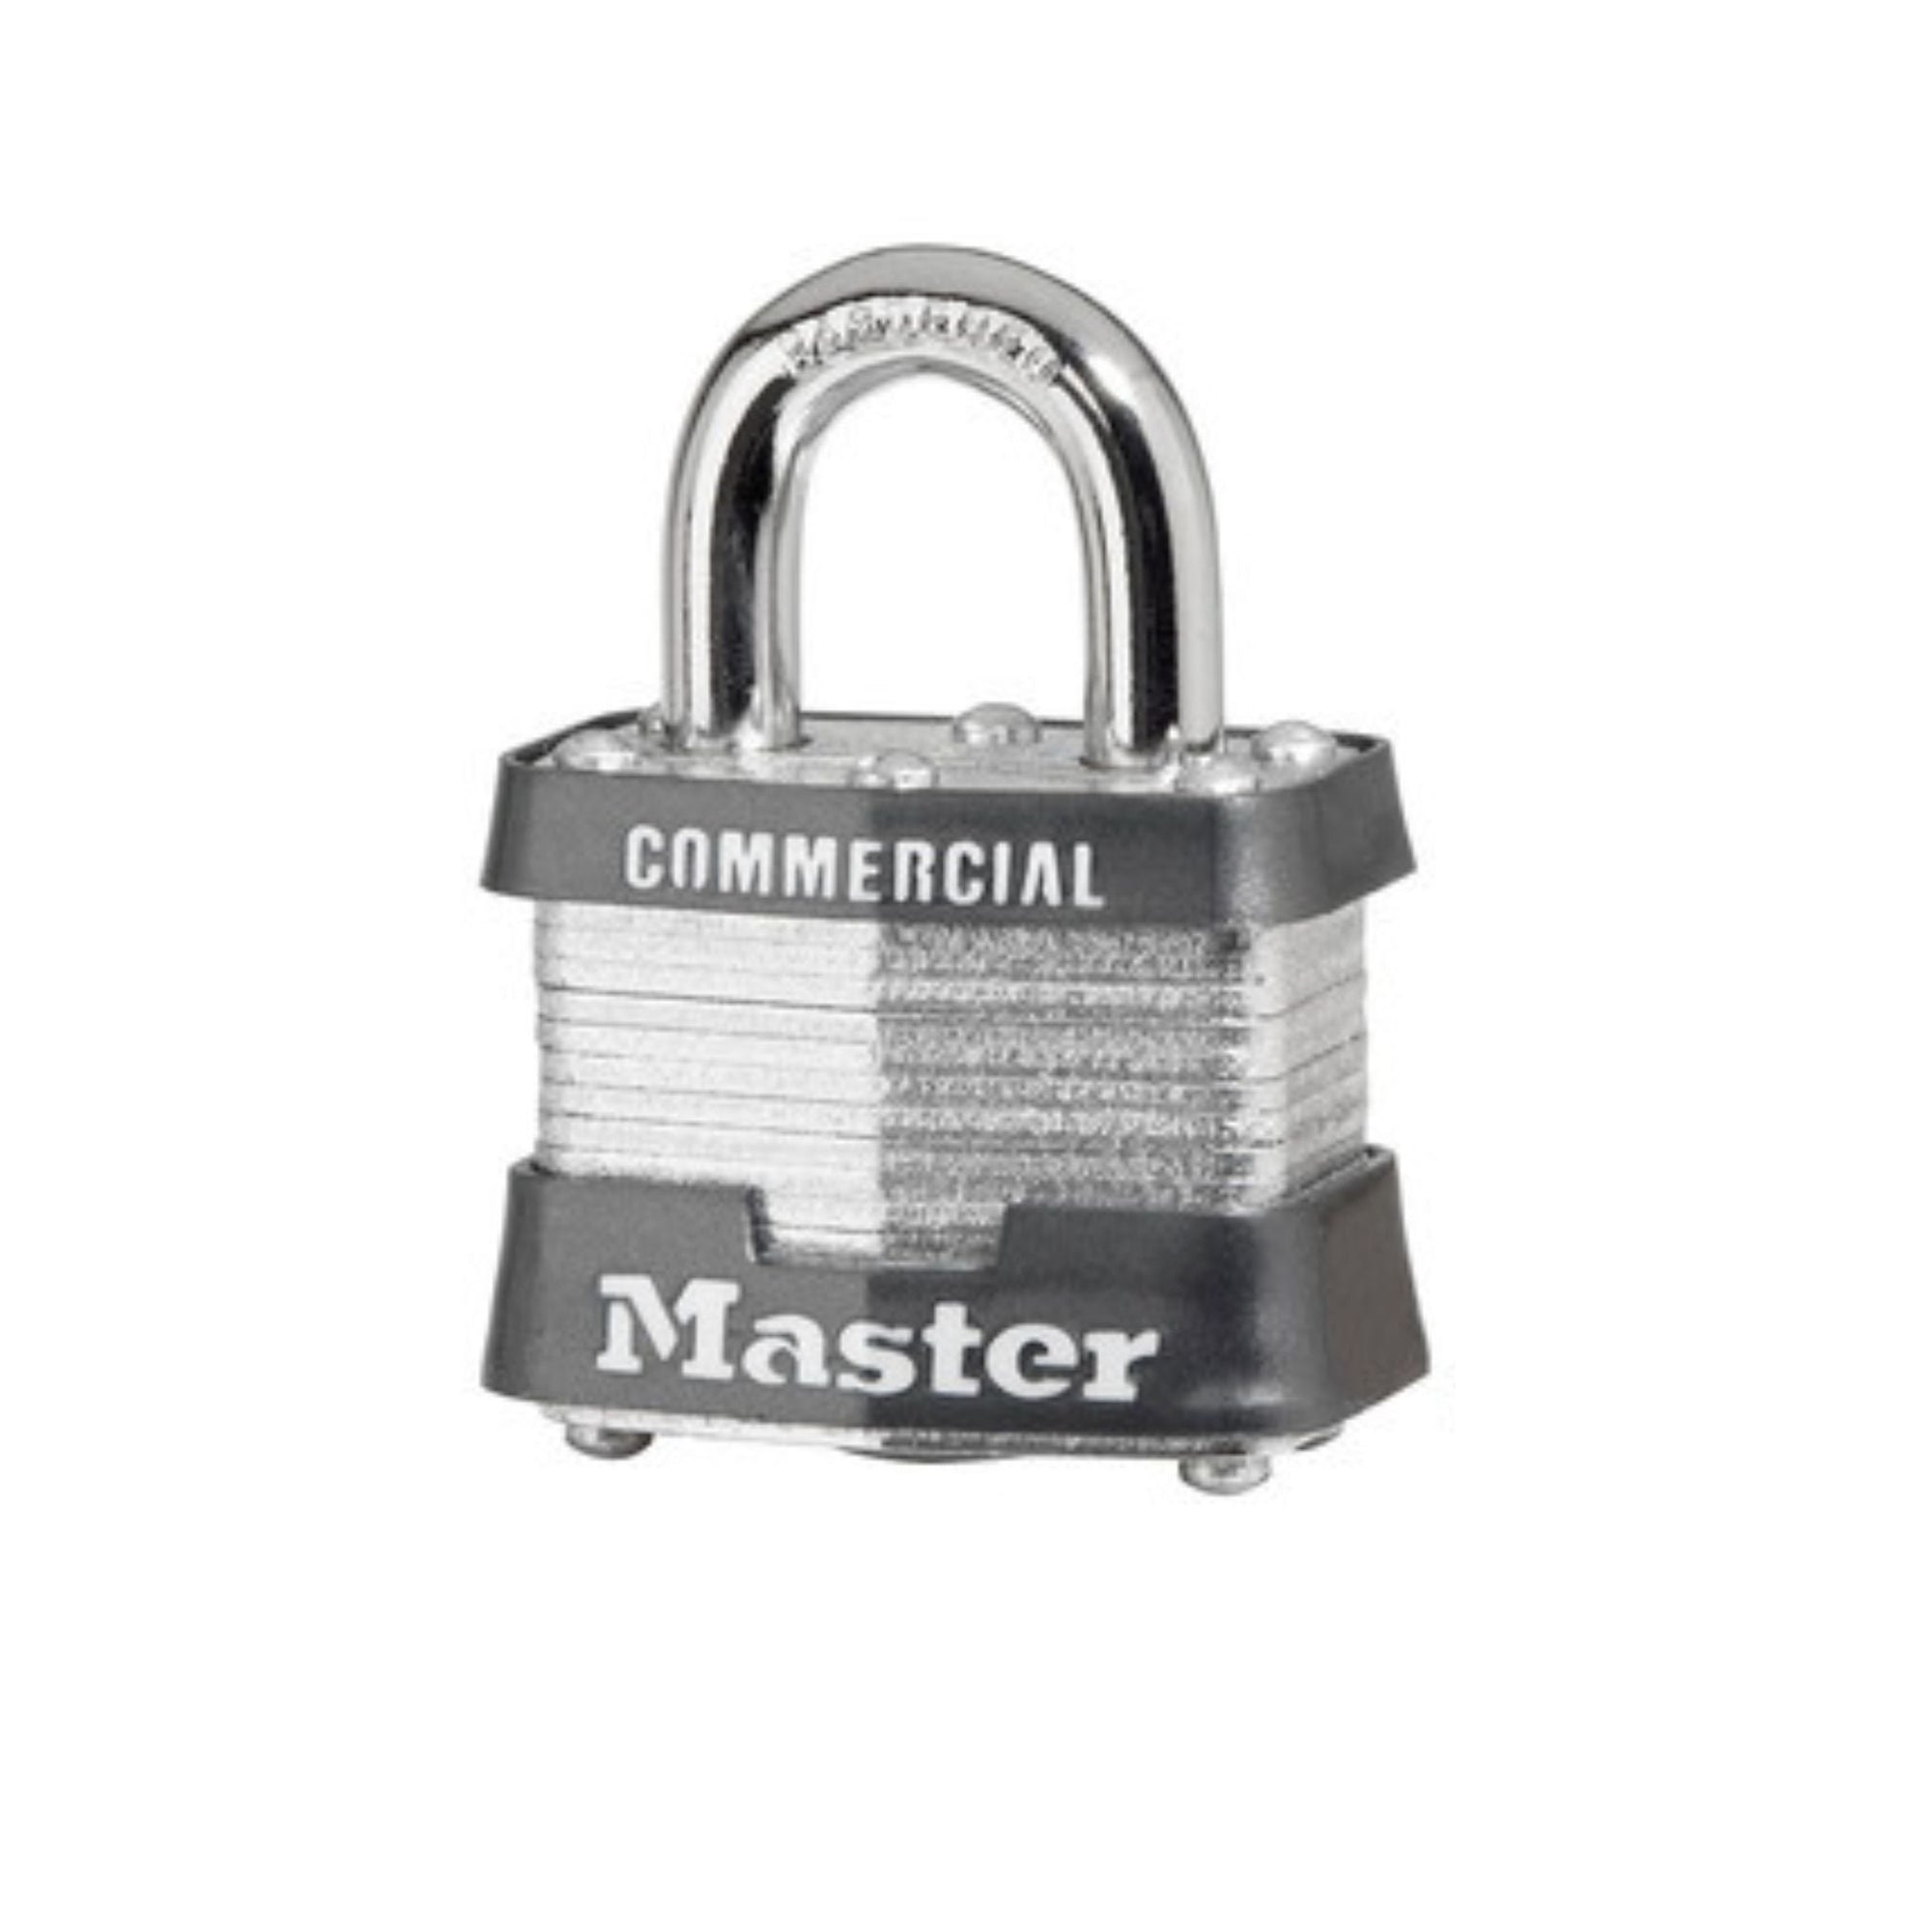 Master Lock 3KA 0313 Lock Laminated steel No. 3 Series Padlock Keyed to Match Existing Key Number KA0313 - The Lock Source